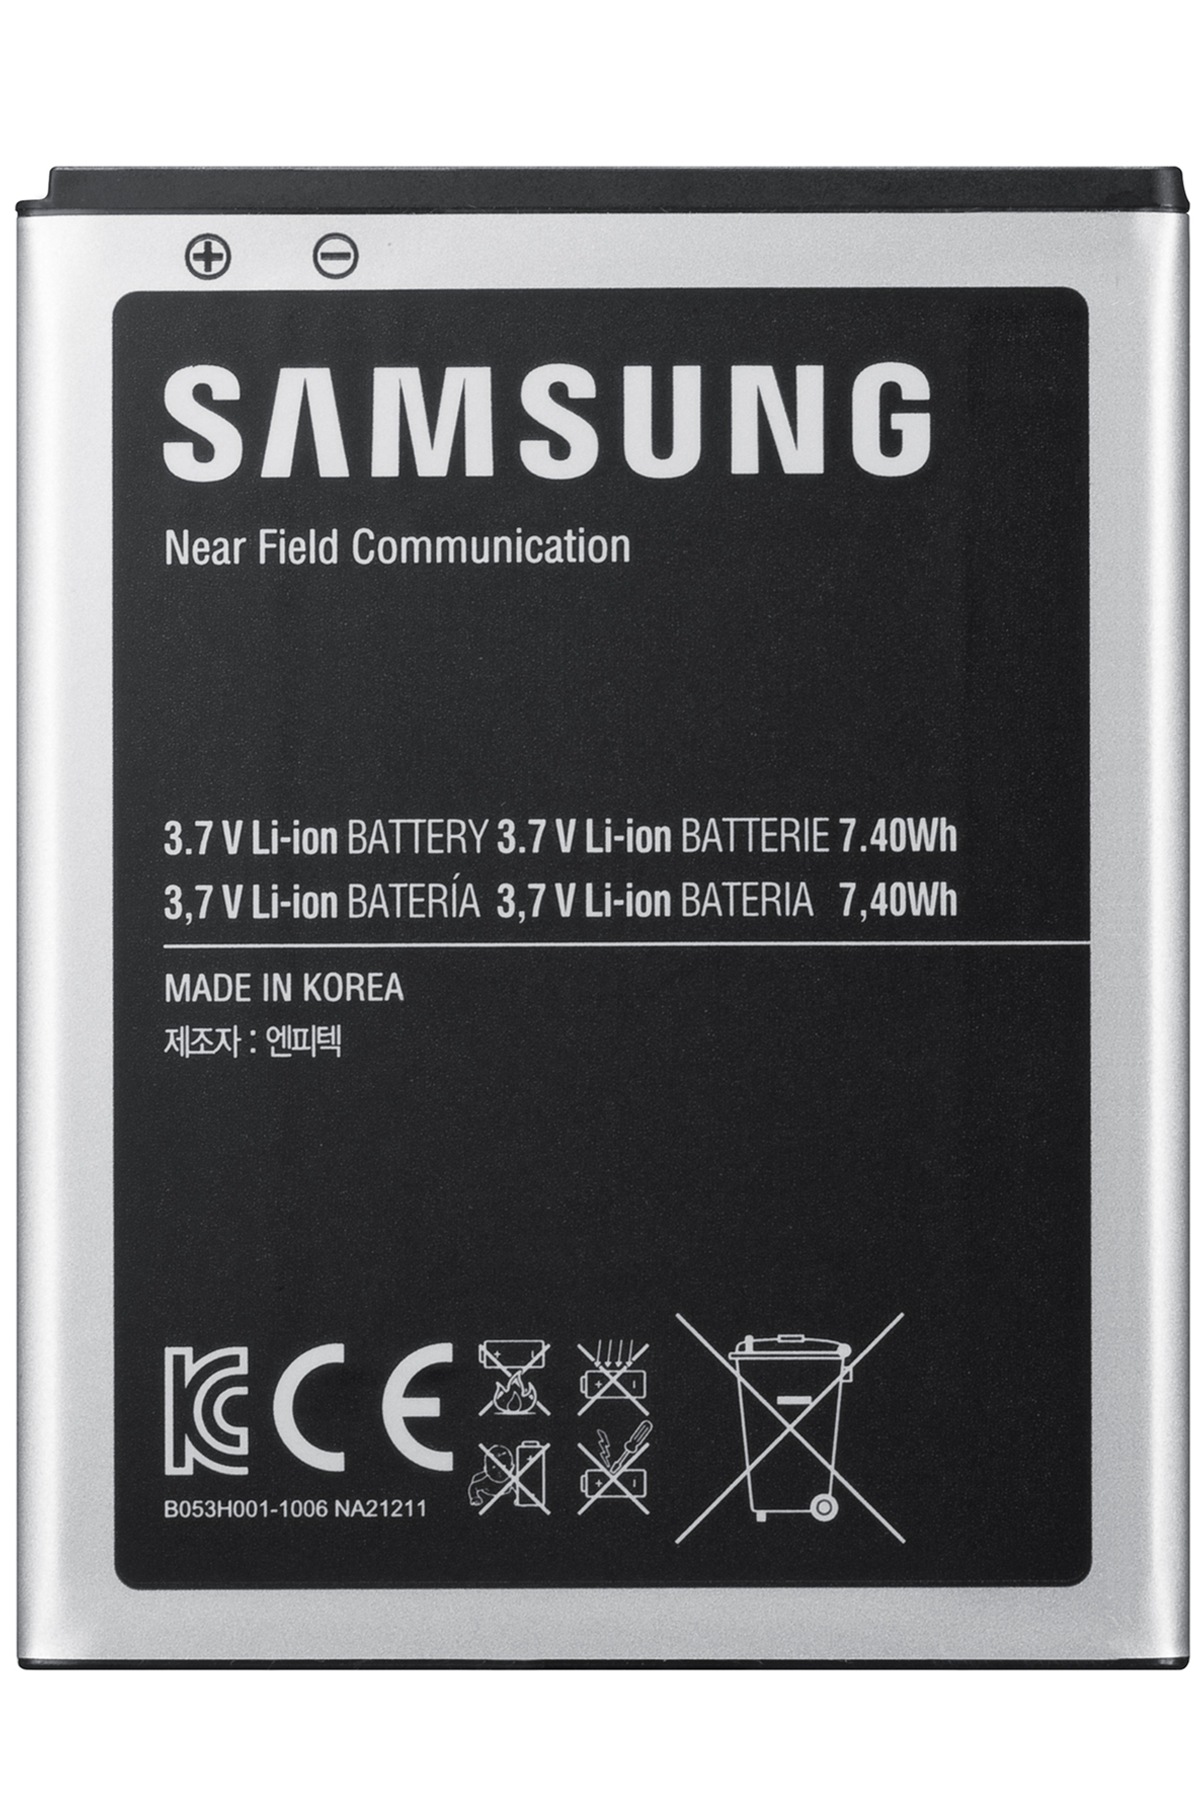 zoom Premedicatie Berg kleding op Galaxy S4 Standard Battery | Samsung Support CA